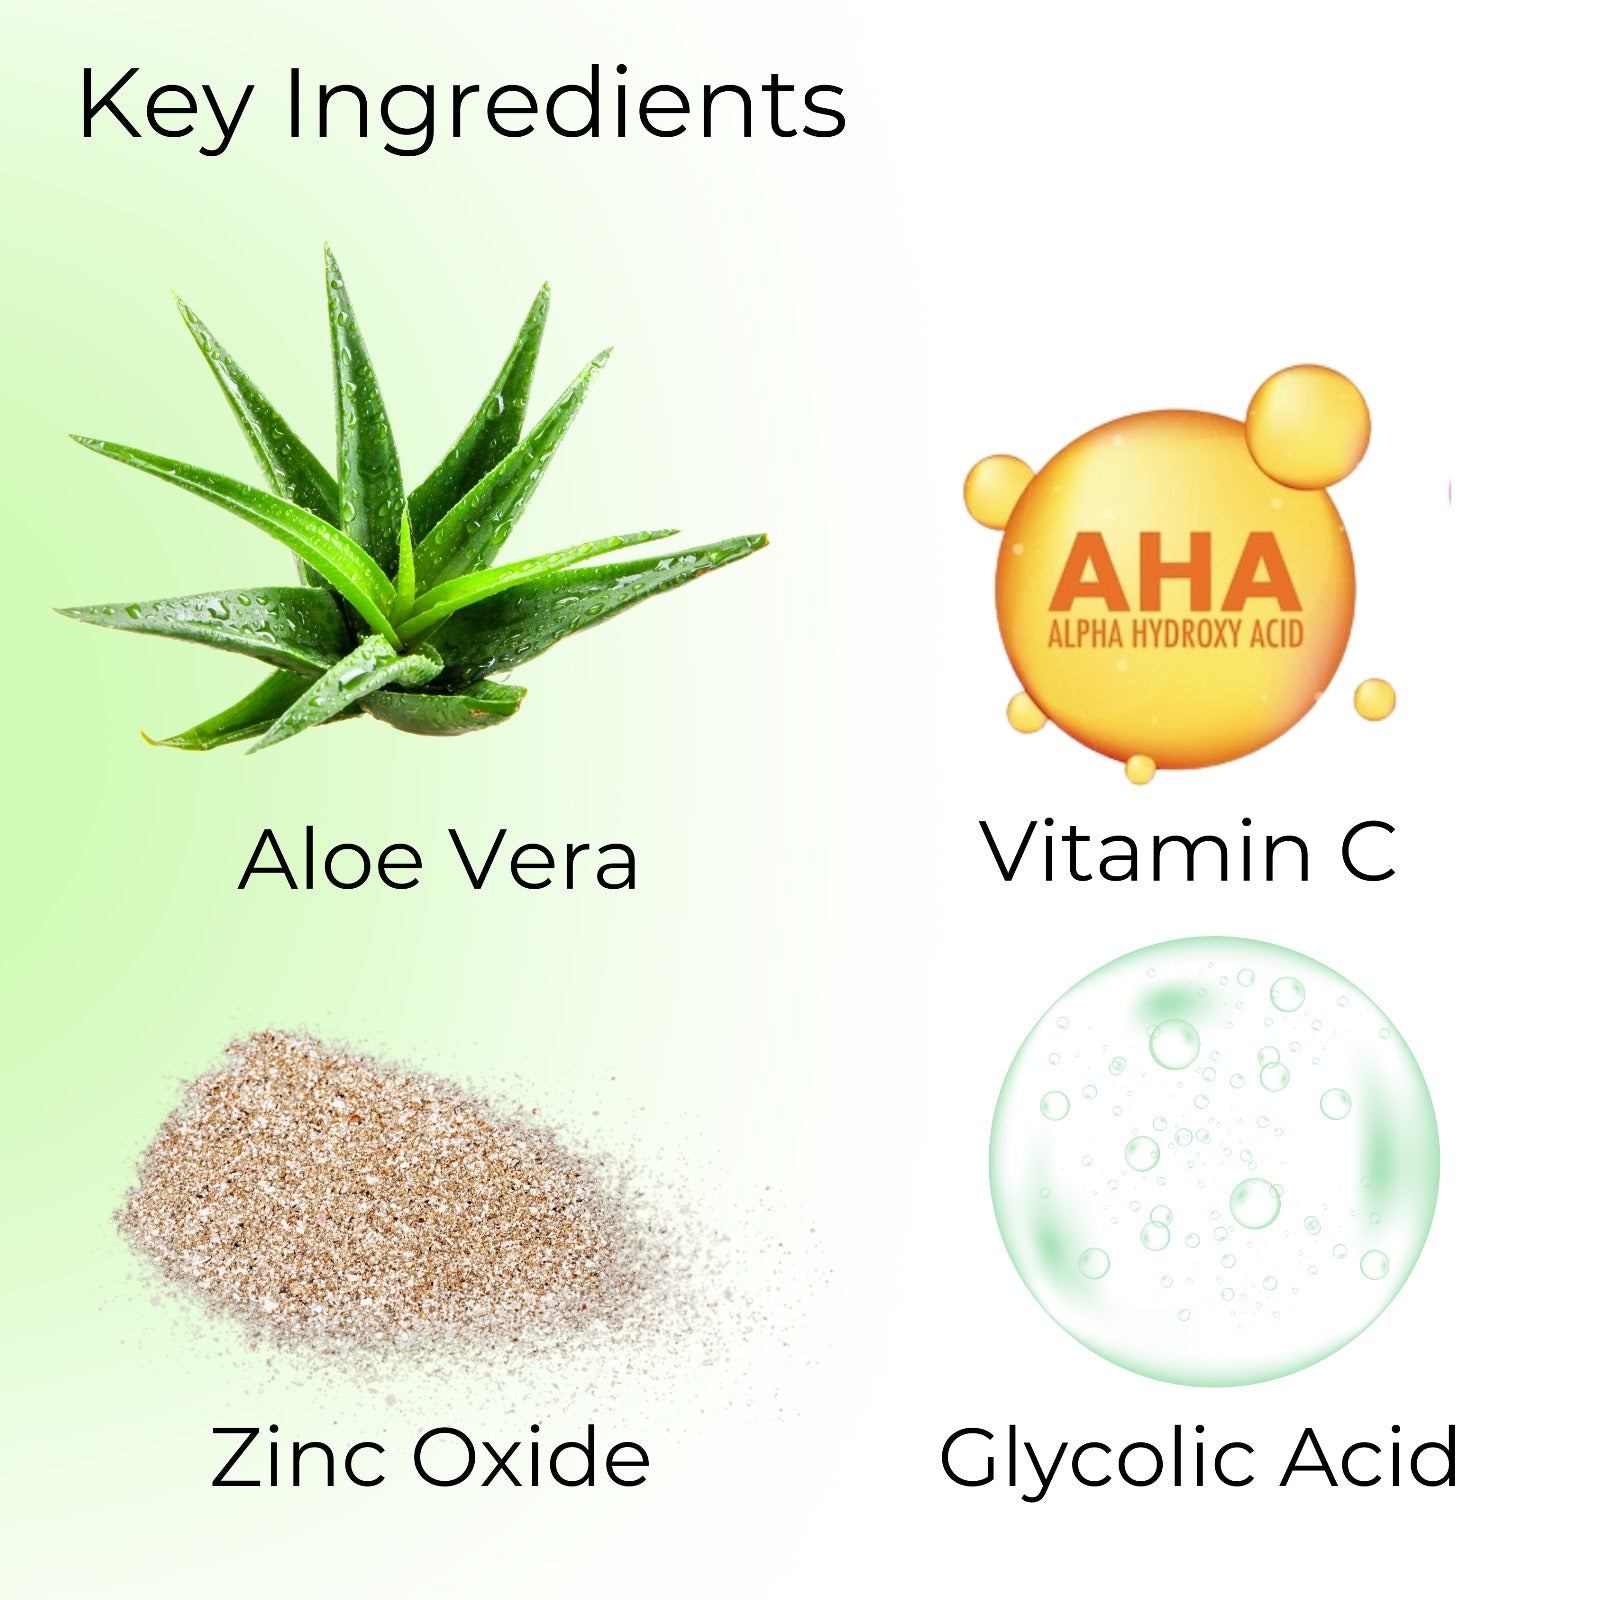 Key Ingredients are aloe vera, vitamin c, zinc oxide, and glycolic acid